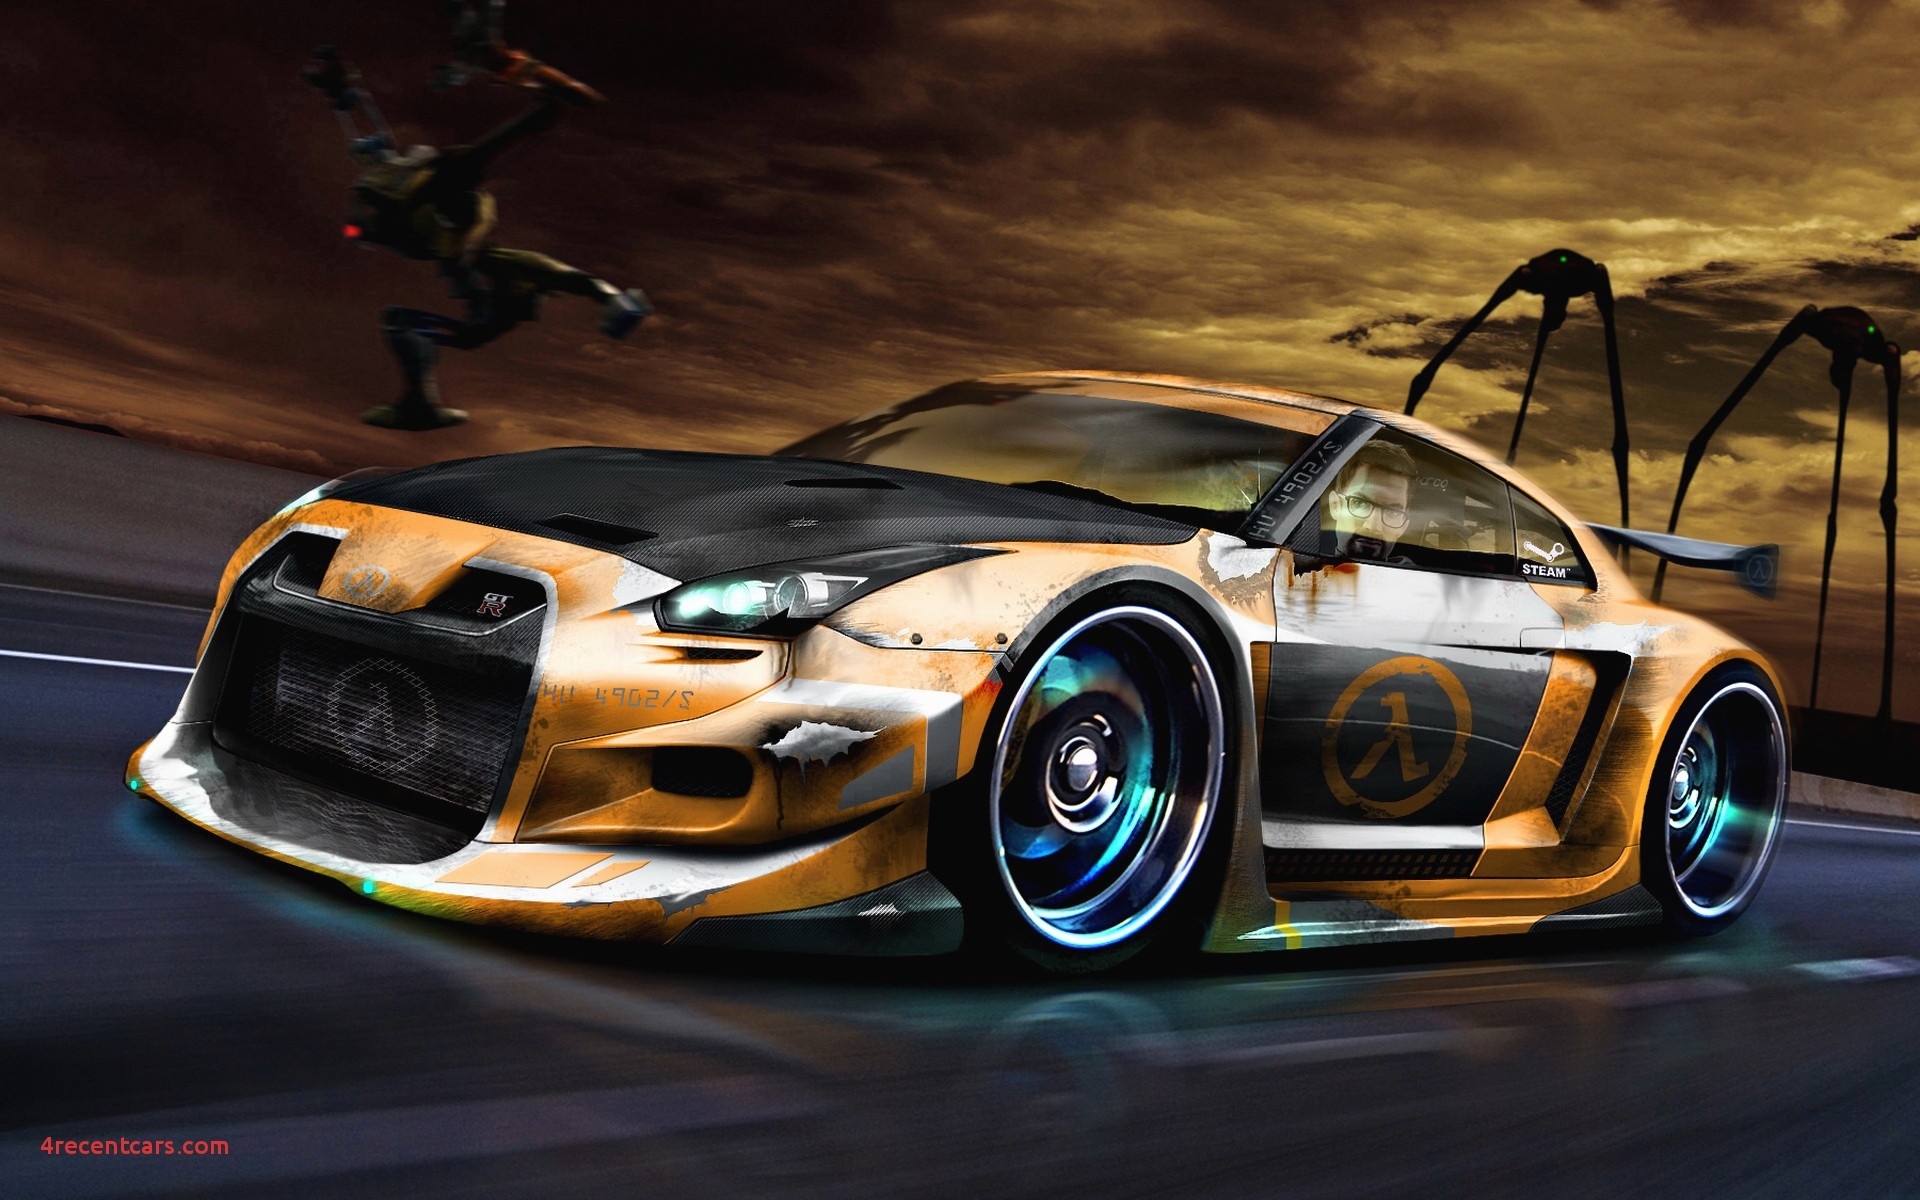 10 New Street Race Cars Wallpapers FULL HD 1080p For PC Desktop 2021